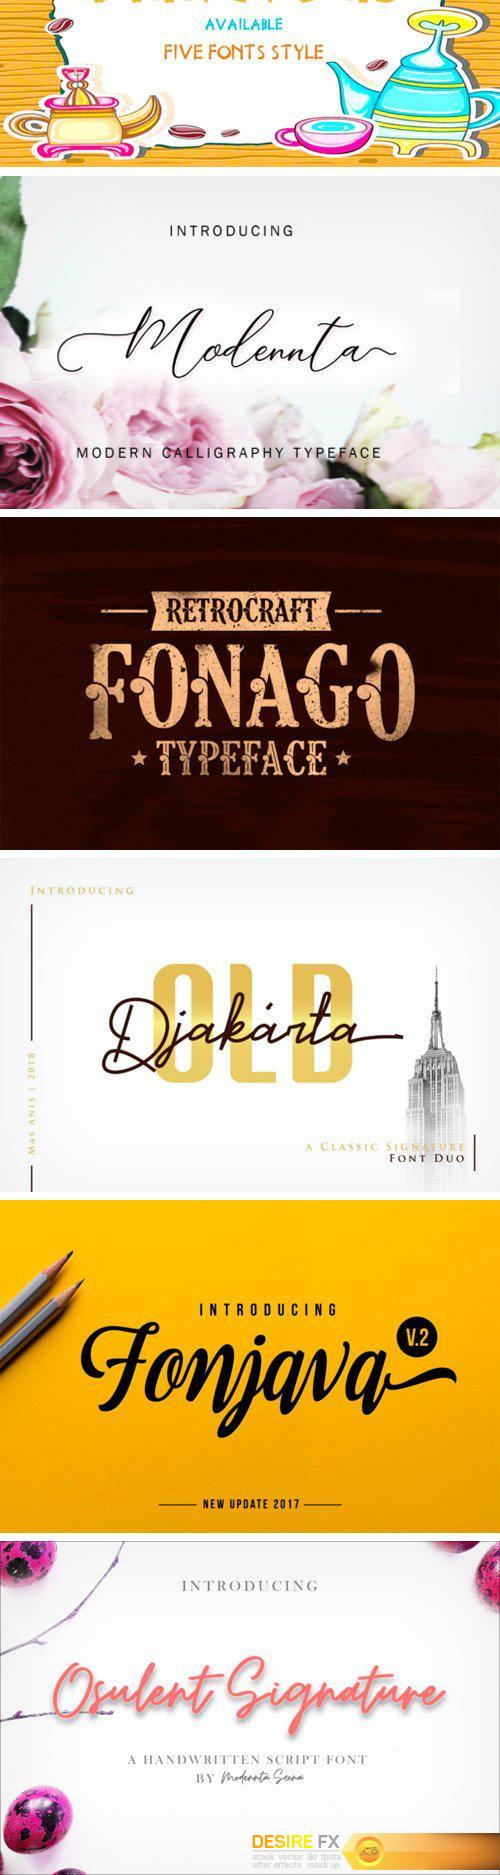 Creativefabrica - 16 Premium Fonts Bundle Vol. 2